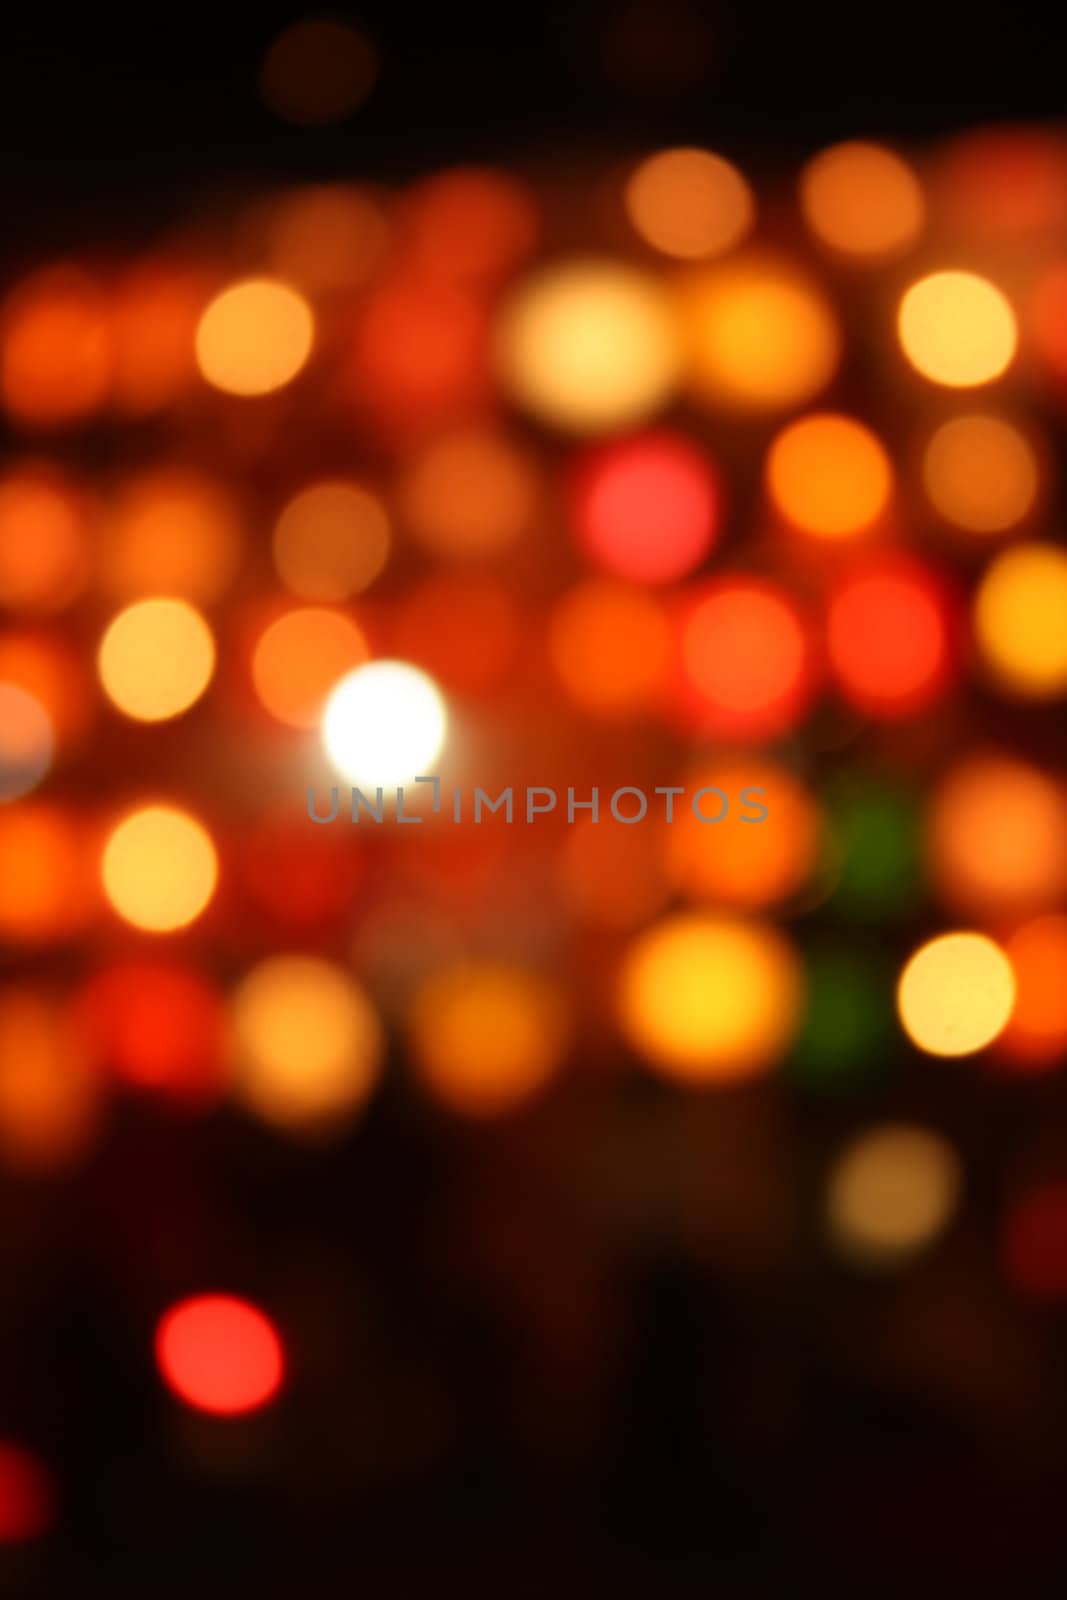 A background of beautiful light blurs